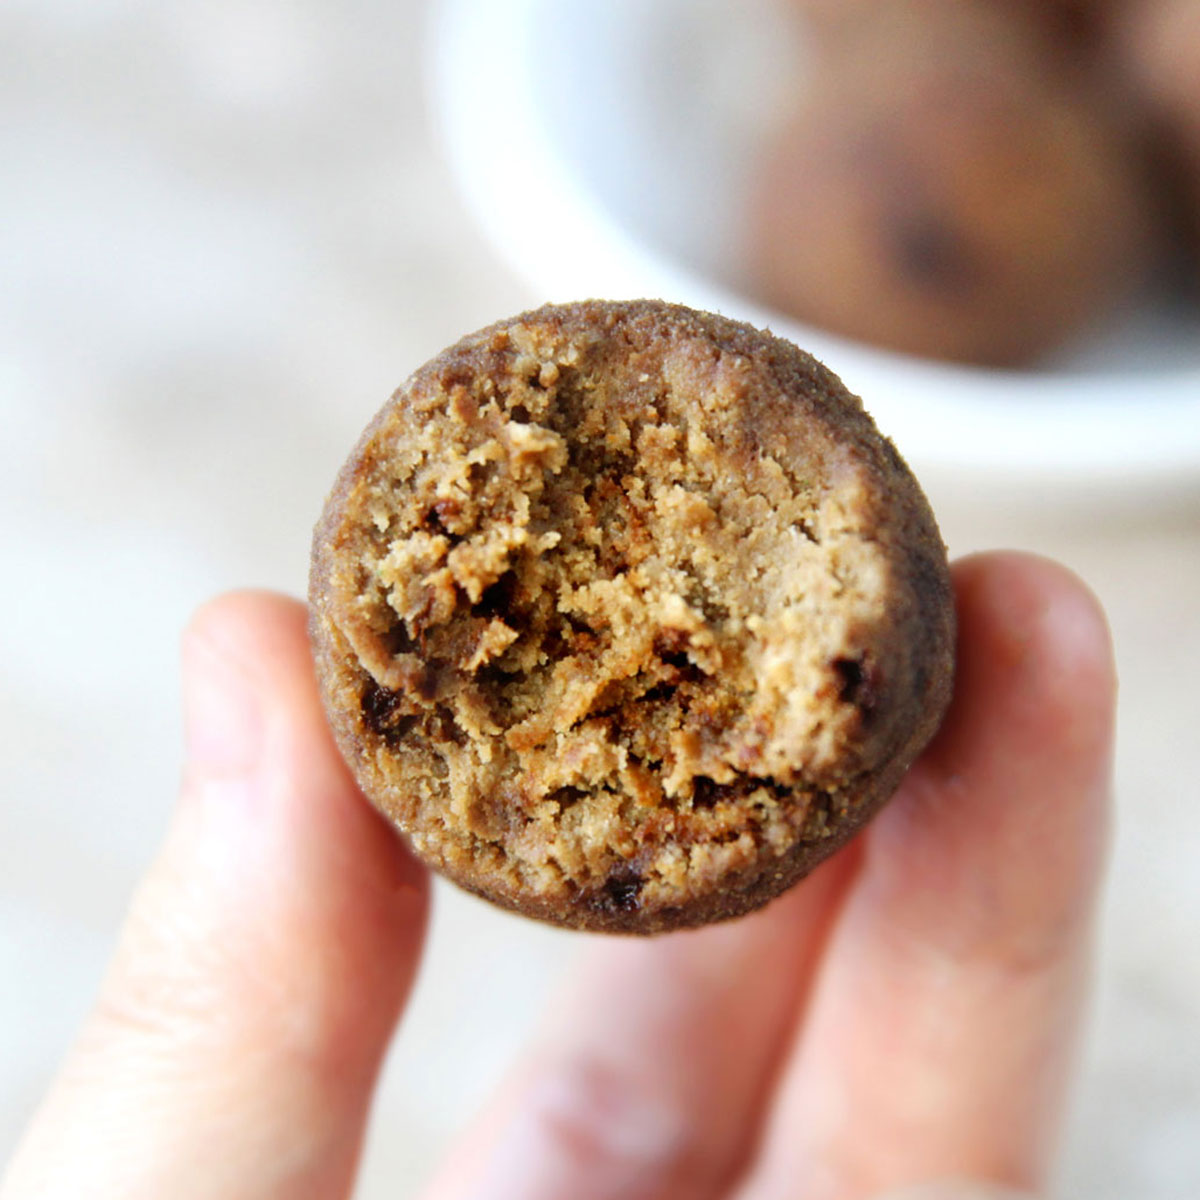 Easy 4-Ingredient Nutella Protein Balls Recipe - Nutella Protein Balls